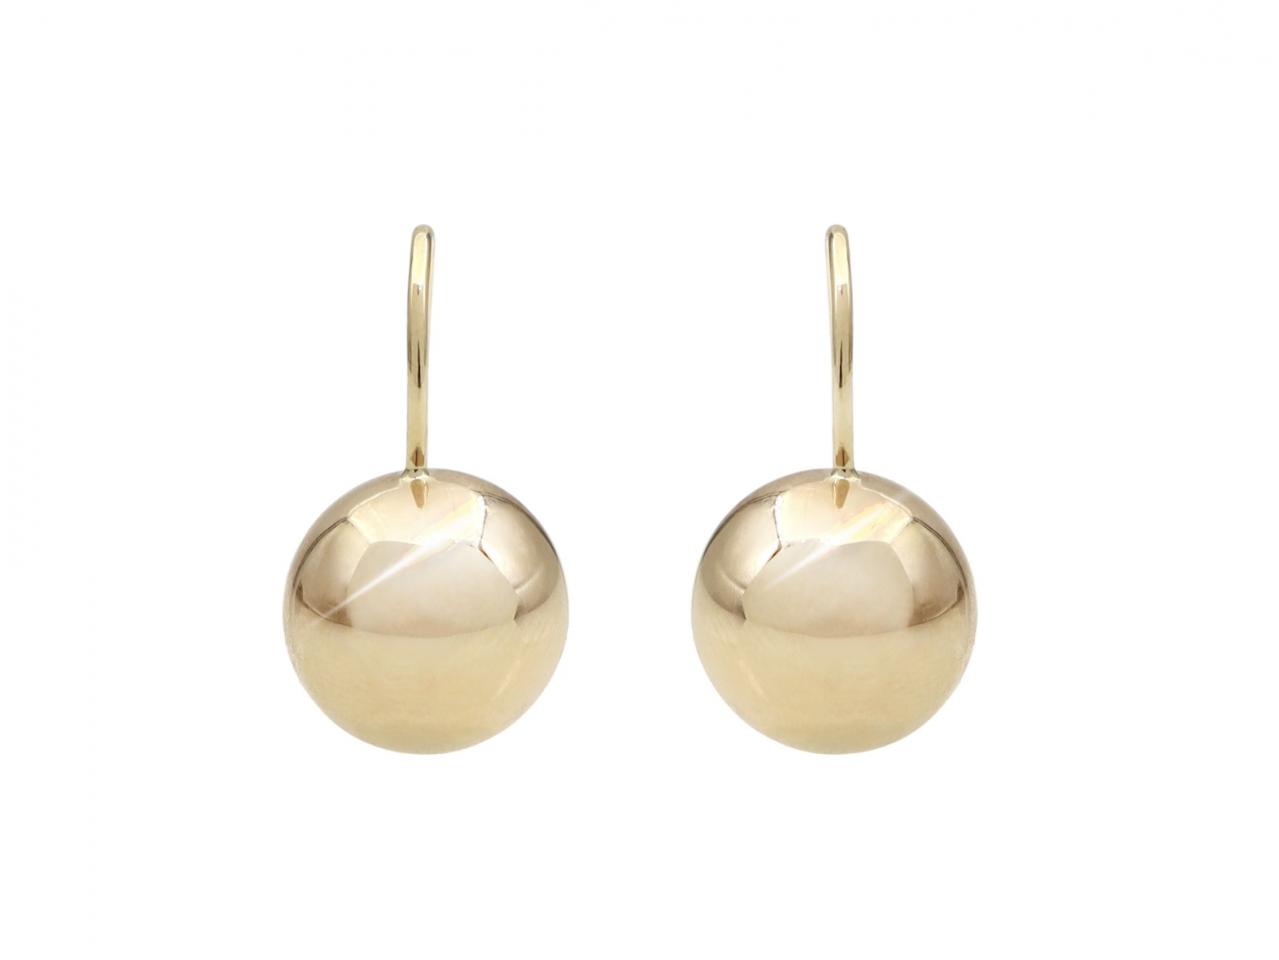 All Jewellery :: Small - Courtville 10mm Euroball earrings in 18kt ...